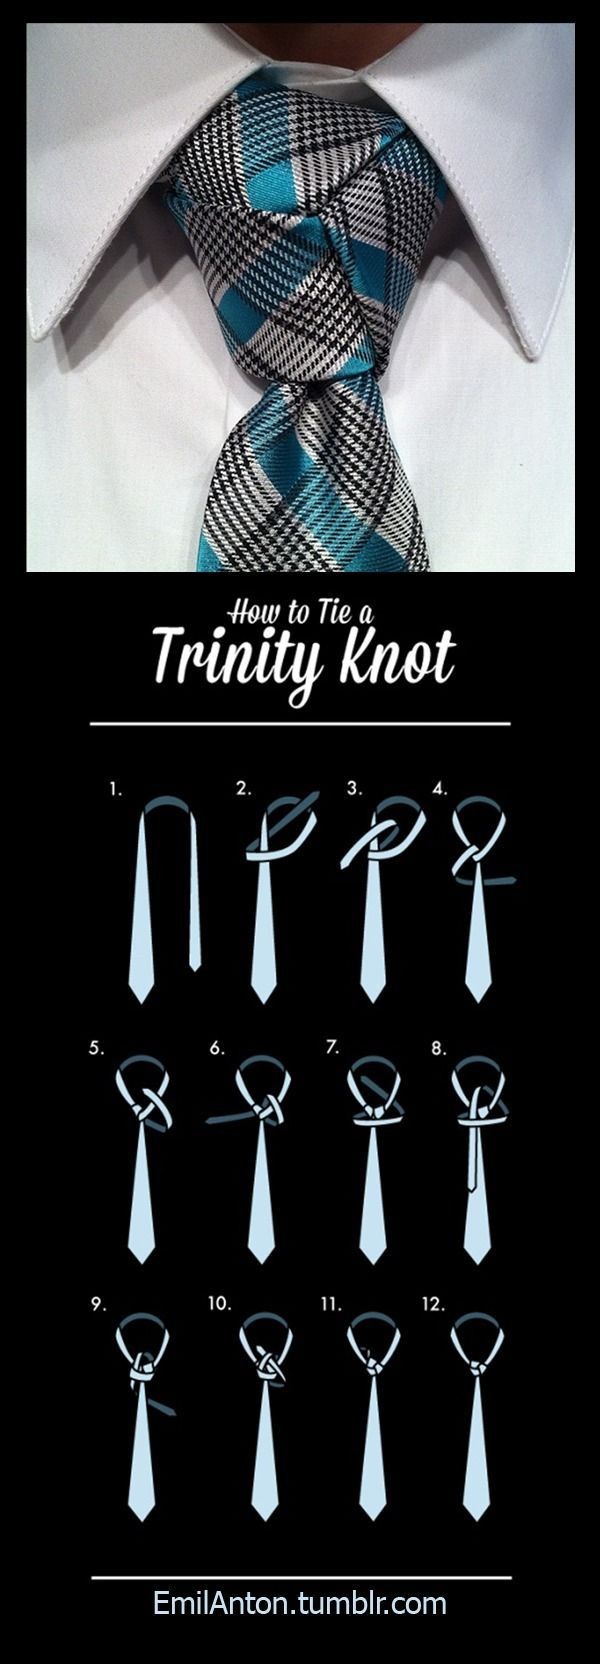 Trinity knot diagram. Rangoni Firenze offers an ex...